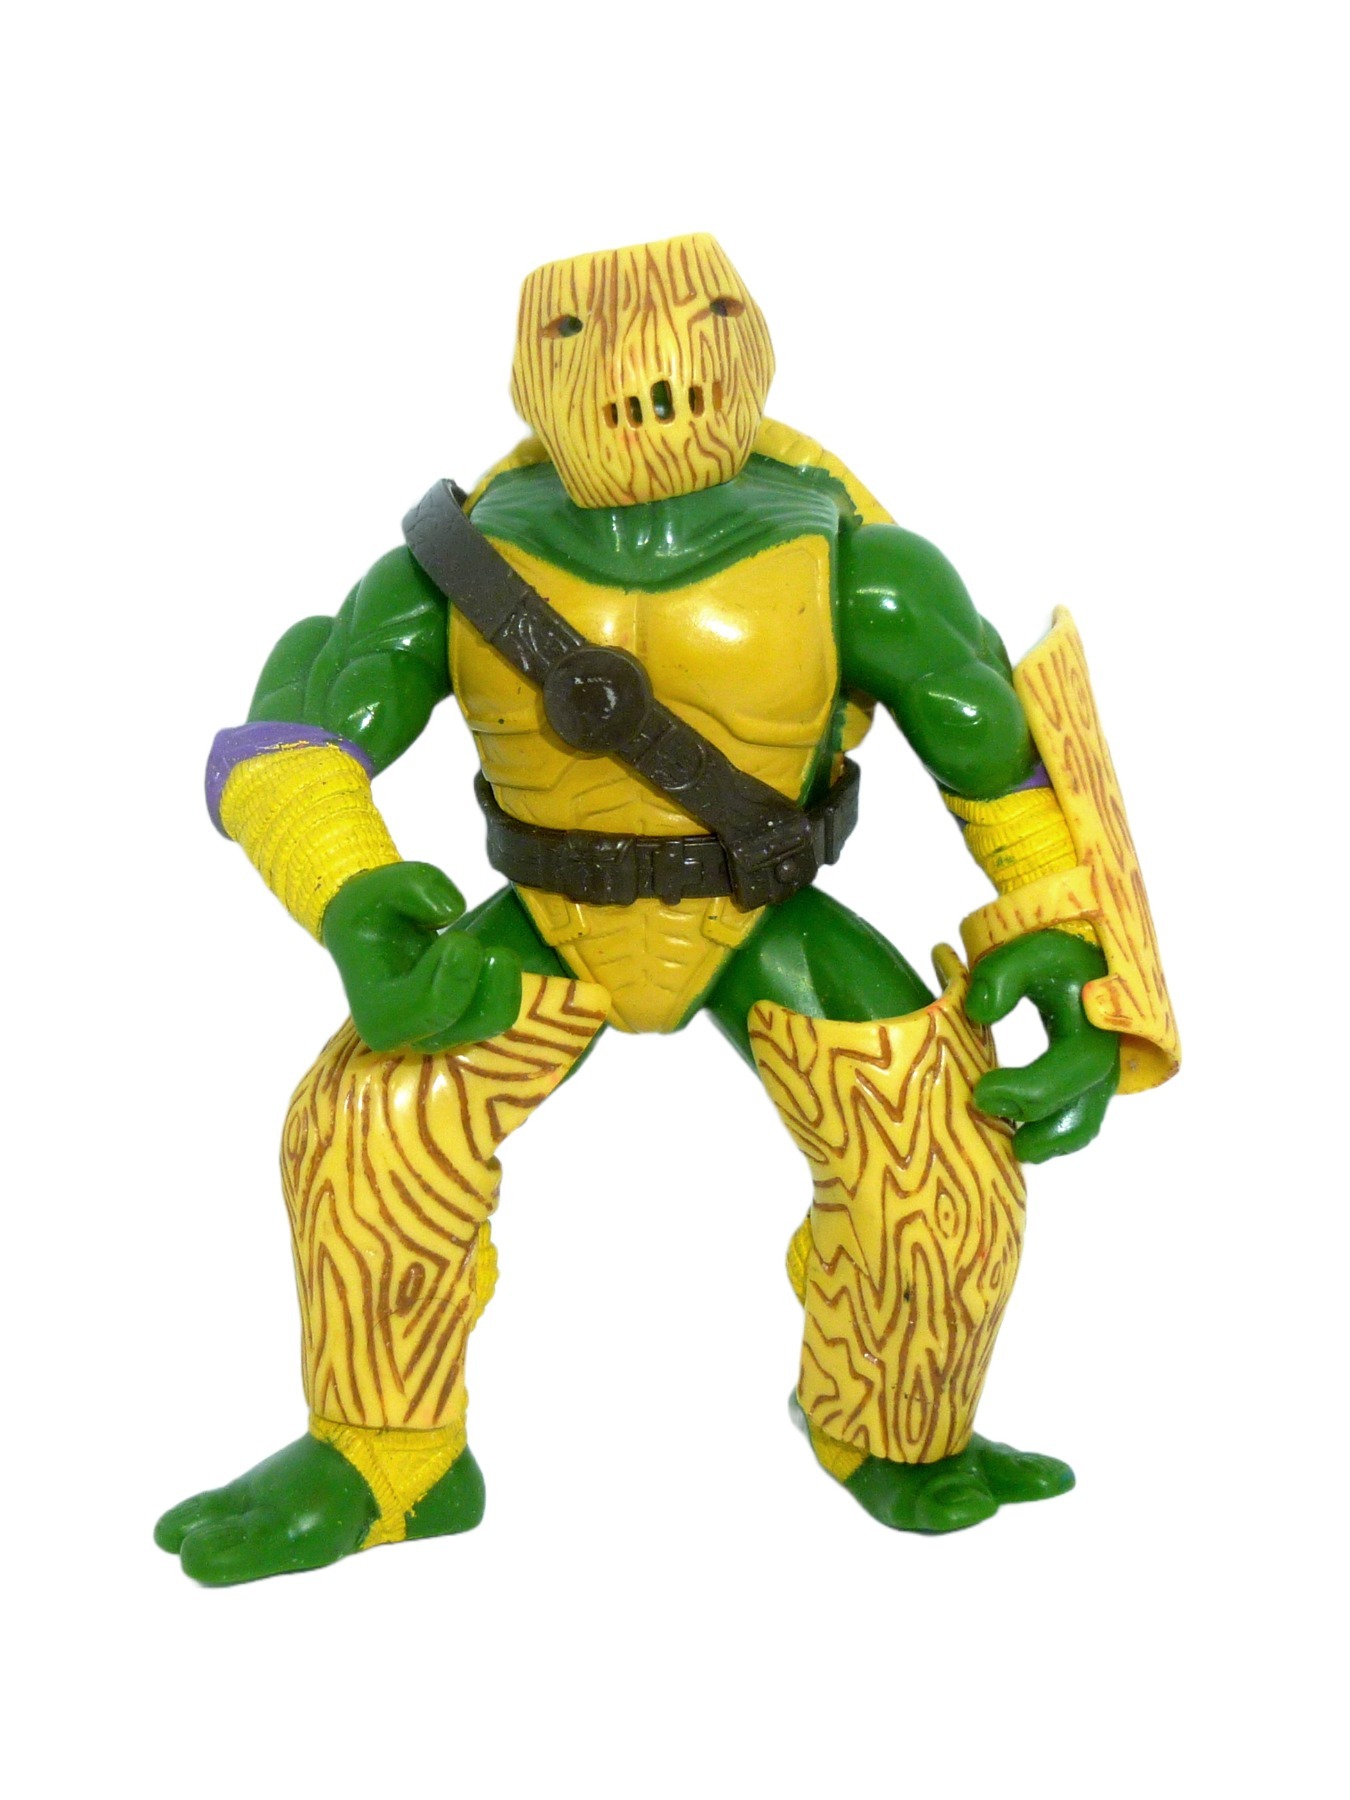 Don Camo-Armor - Turtleflage 1997 Mirage Studios / Playmates Toys 2